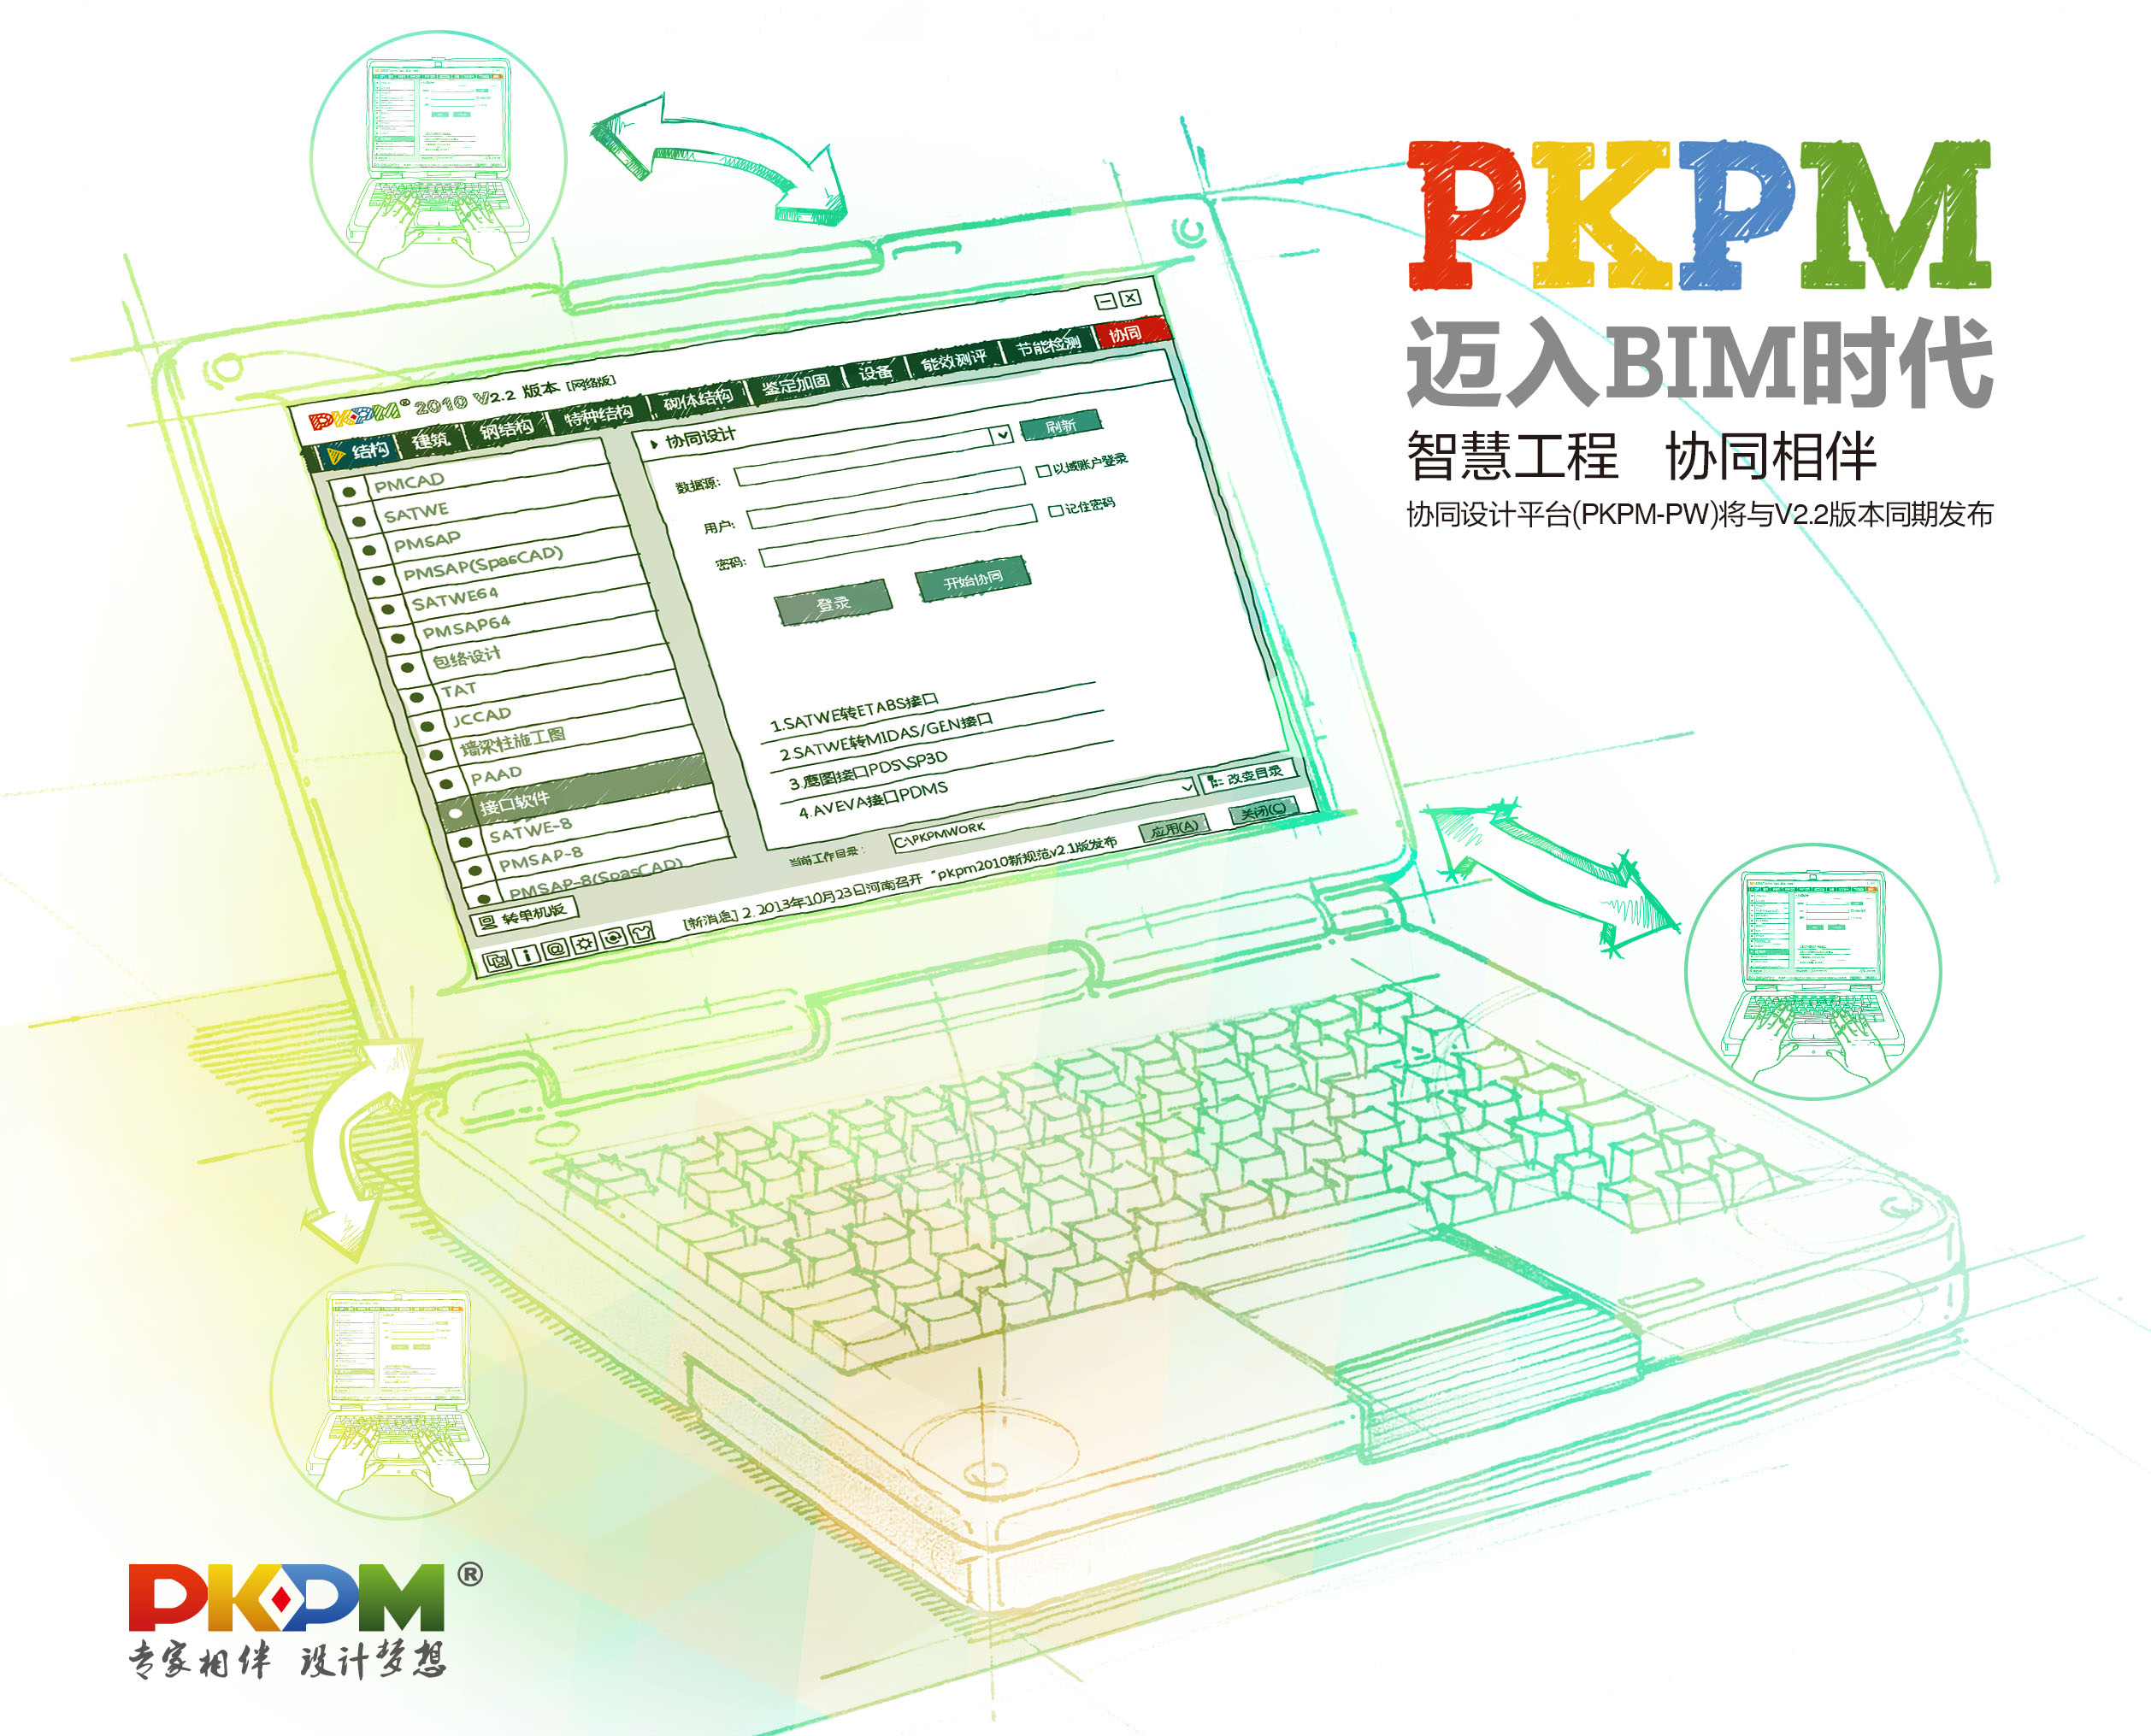 PKPM 2010新规范设计软件 V2.2协同设计版即